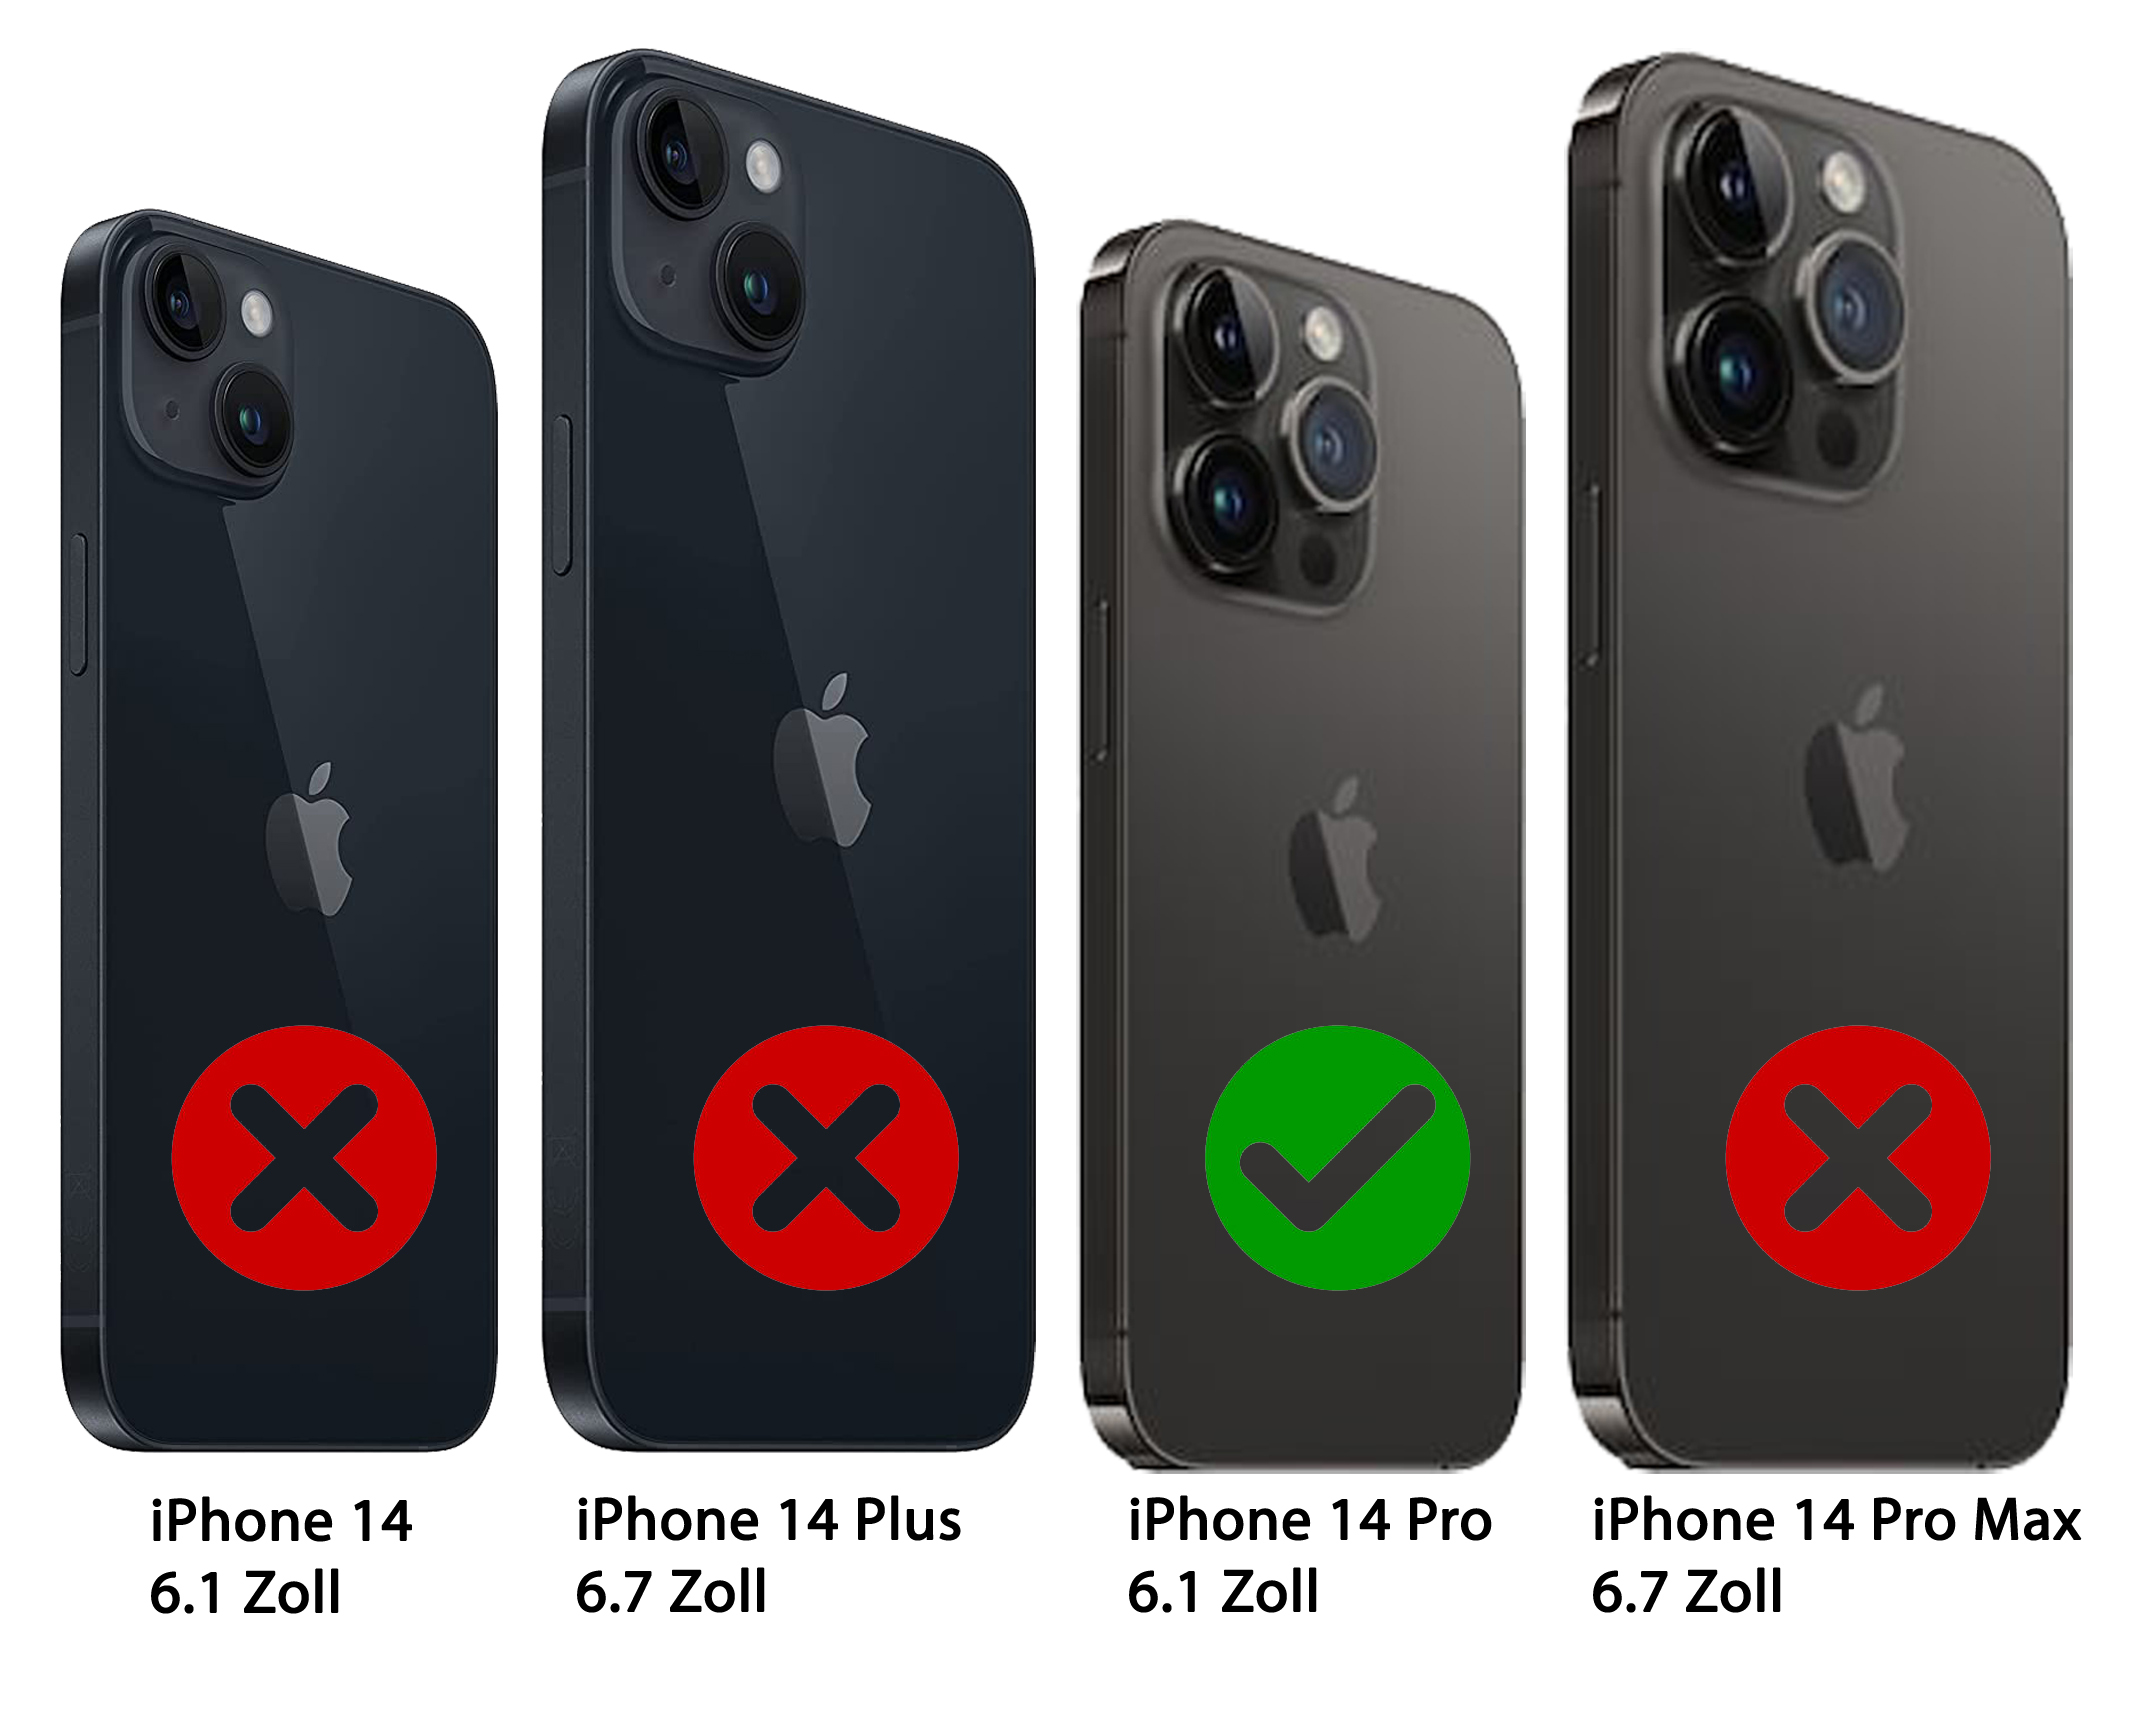 modularem iPhone Cover, Premium Handytasche Apple, Cover, 2-in-1 14 mit BURKLEY Pro, Schwarz Leder Full